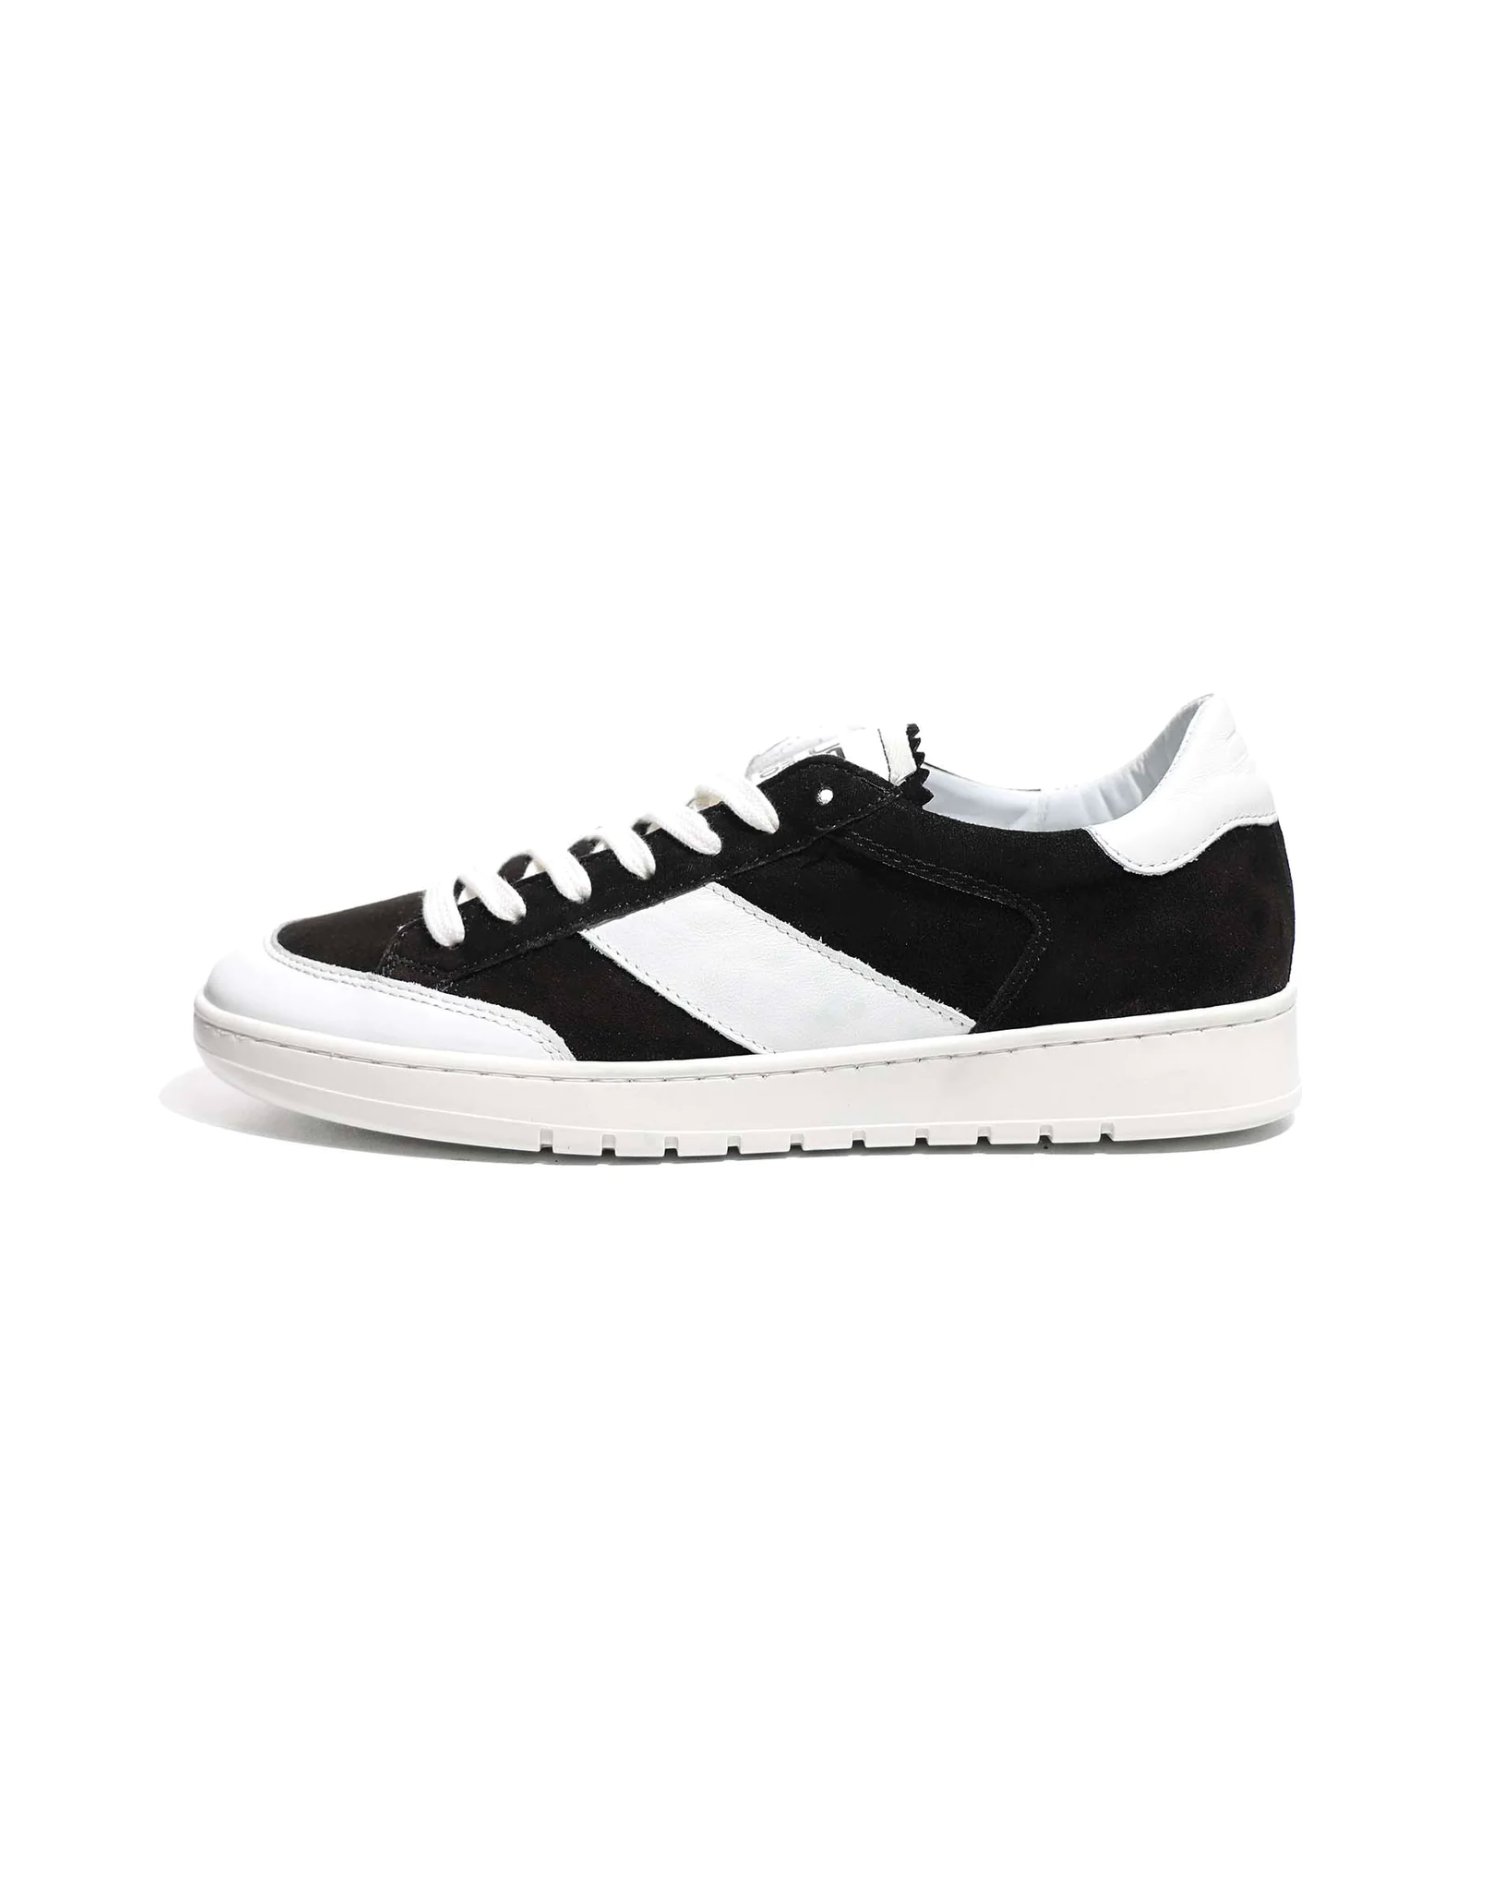 MJUS - Equipman Sneaker - Black/White